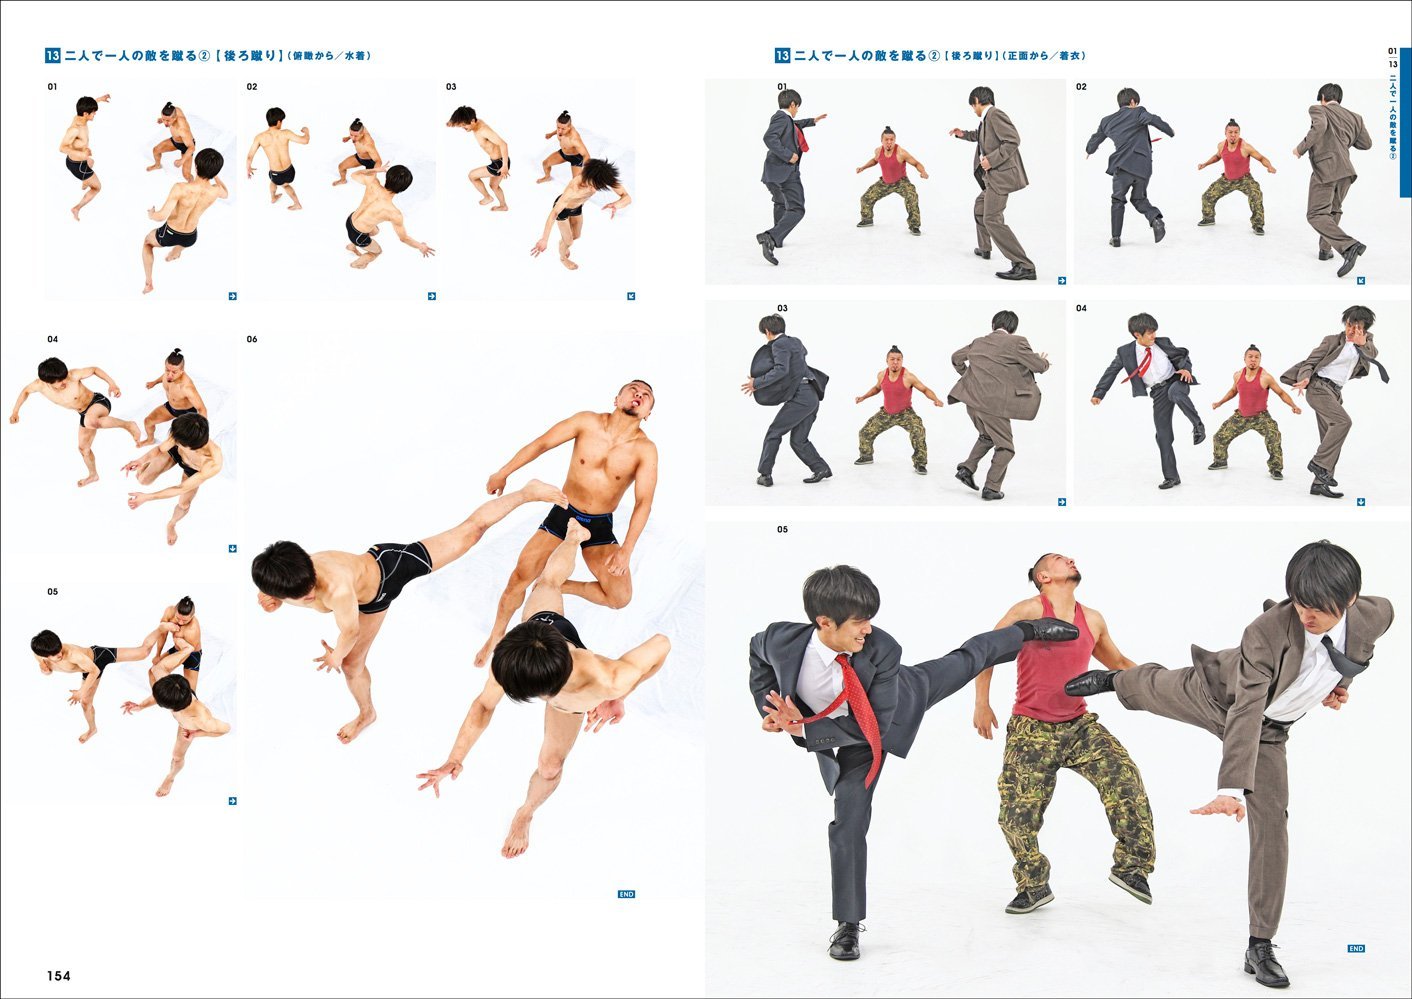 Real Action Pose Collection 02: Buddy Action Edition - Tokyo Otaku Mode  (TOM)